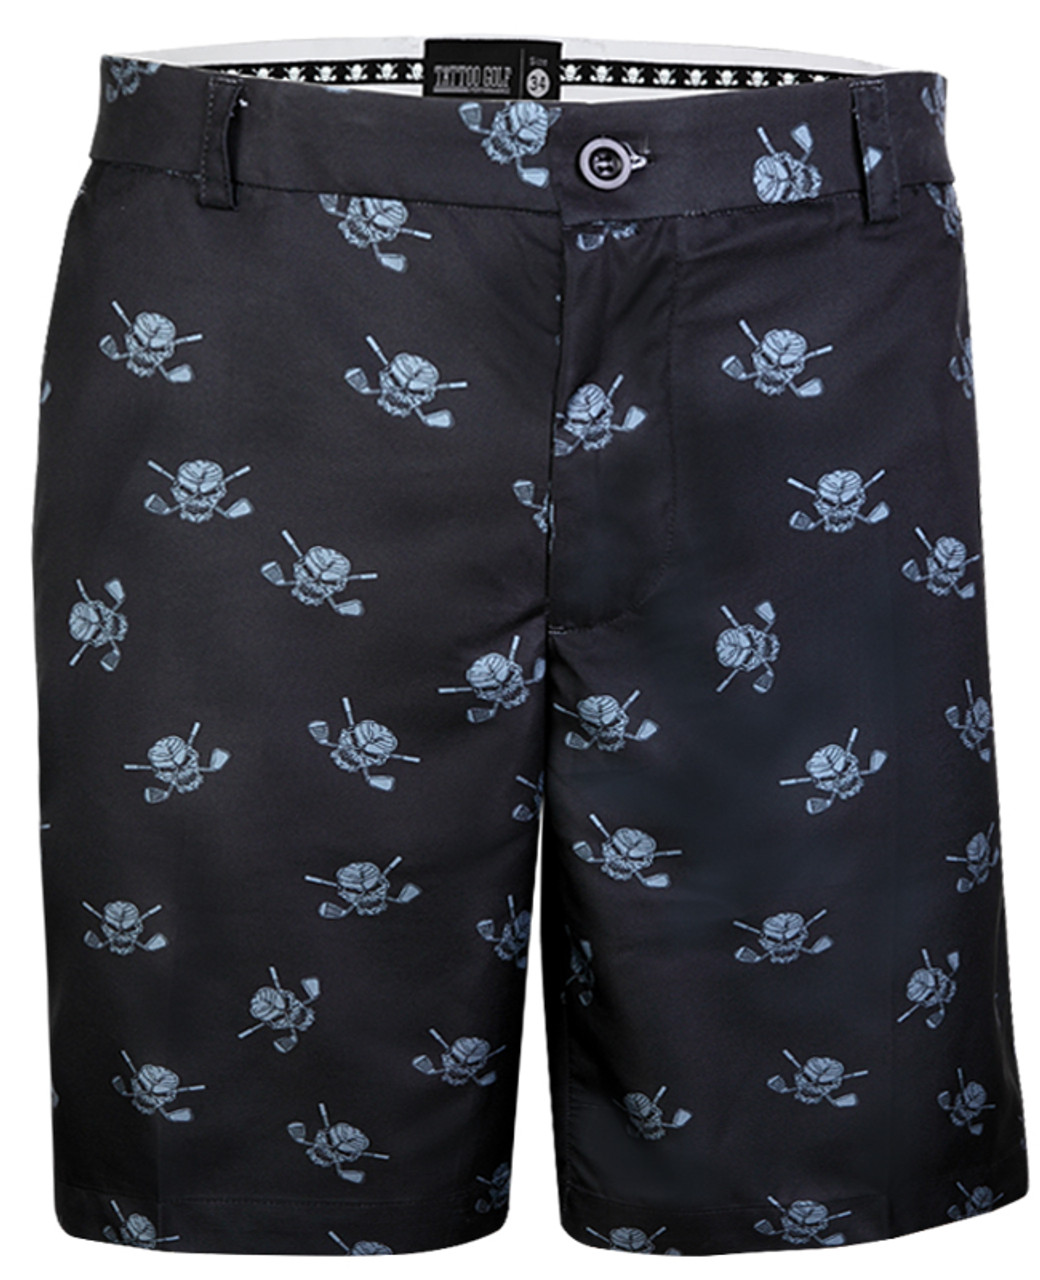 Men's Golf Shorts - ProCool Fabric - Multi-Colored Skull